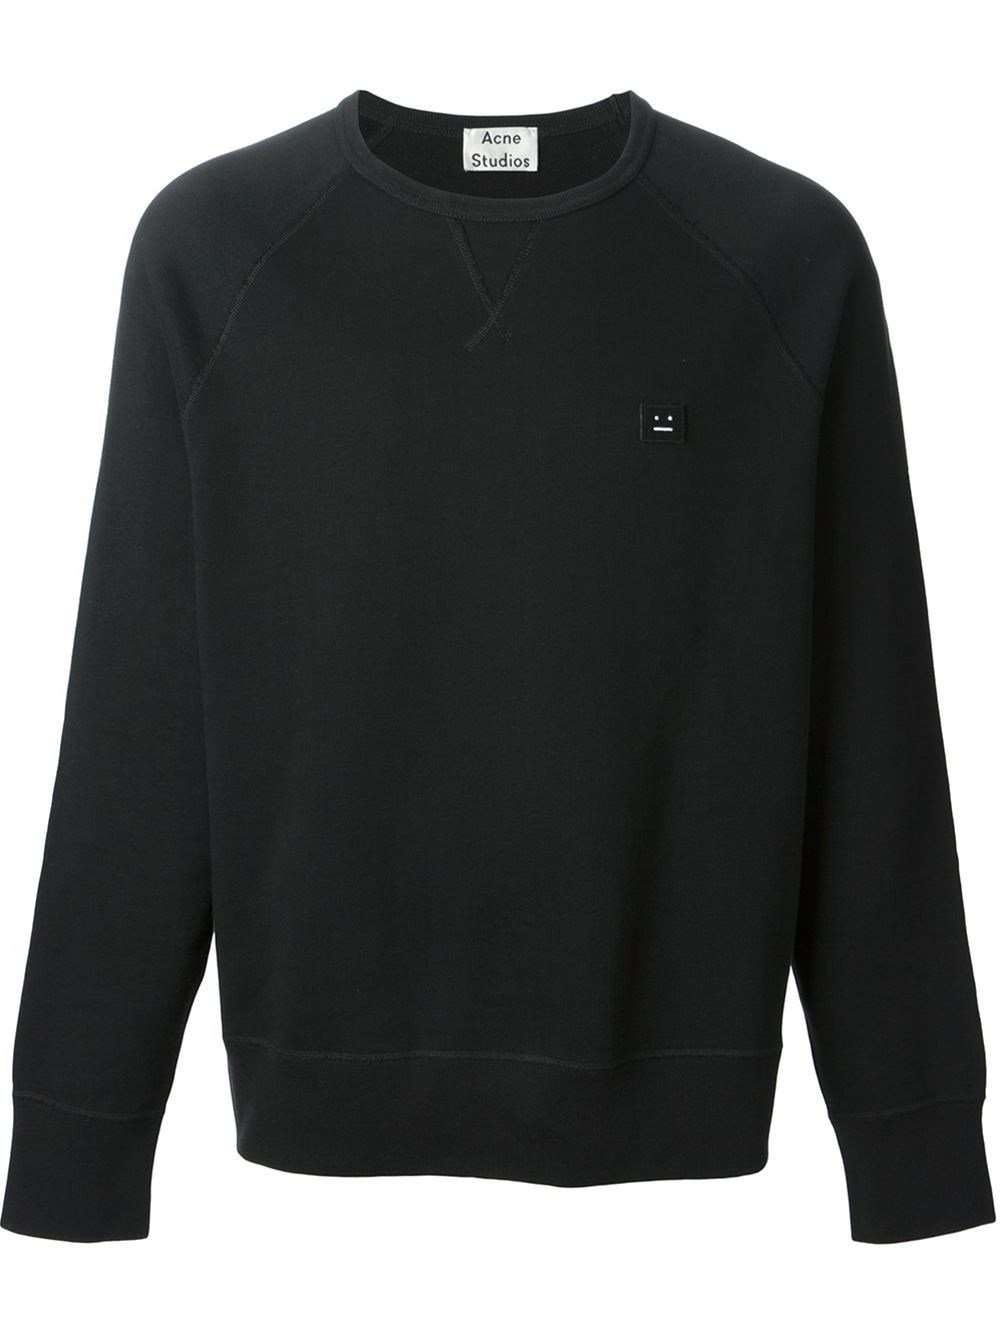 Lyst - Acne Studios College Face Sweatshirt in Black for Men